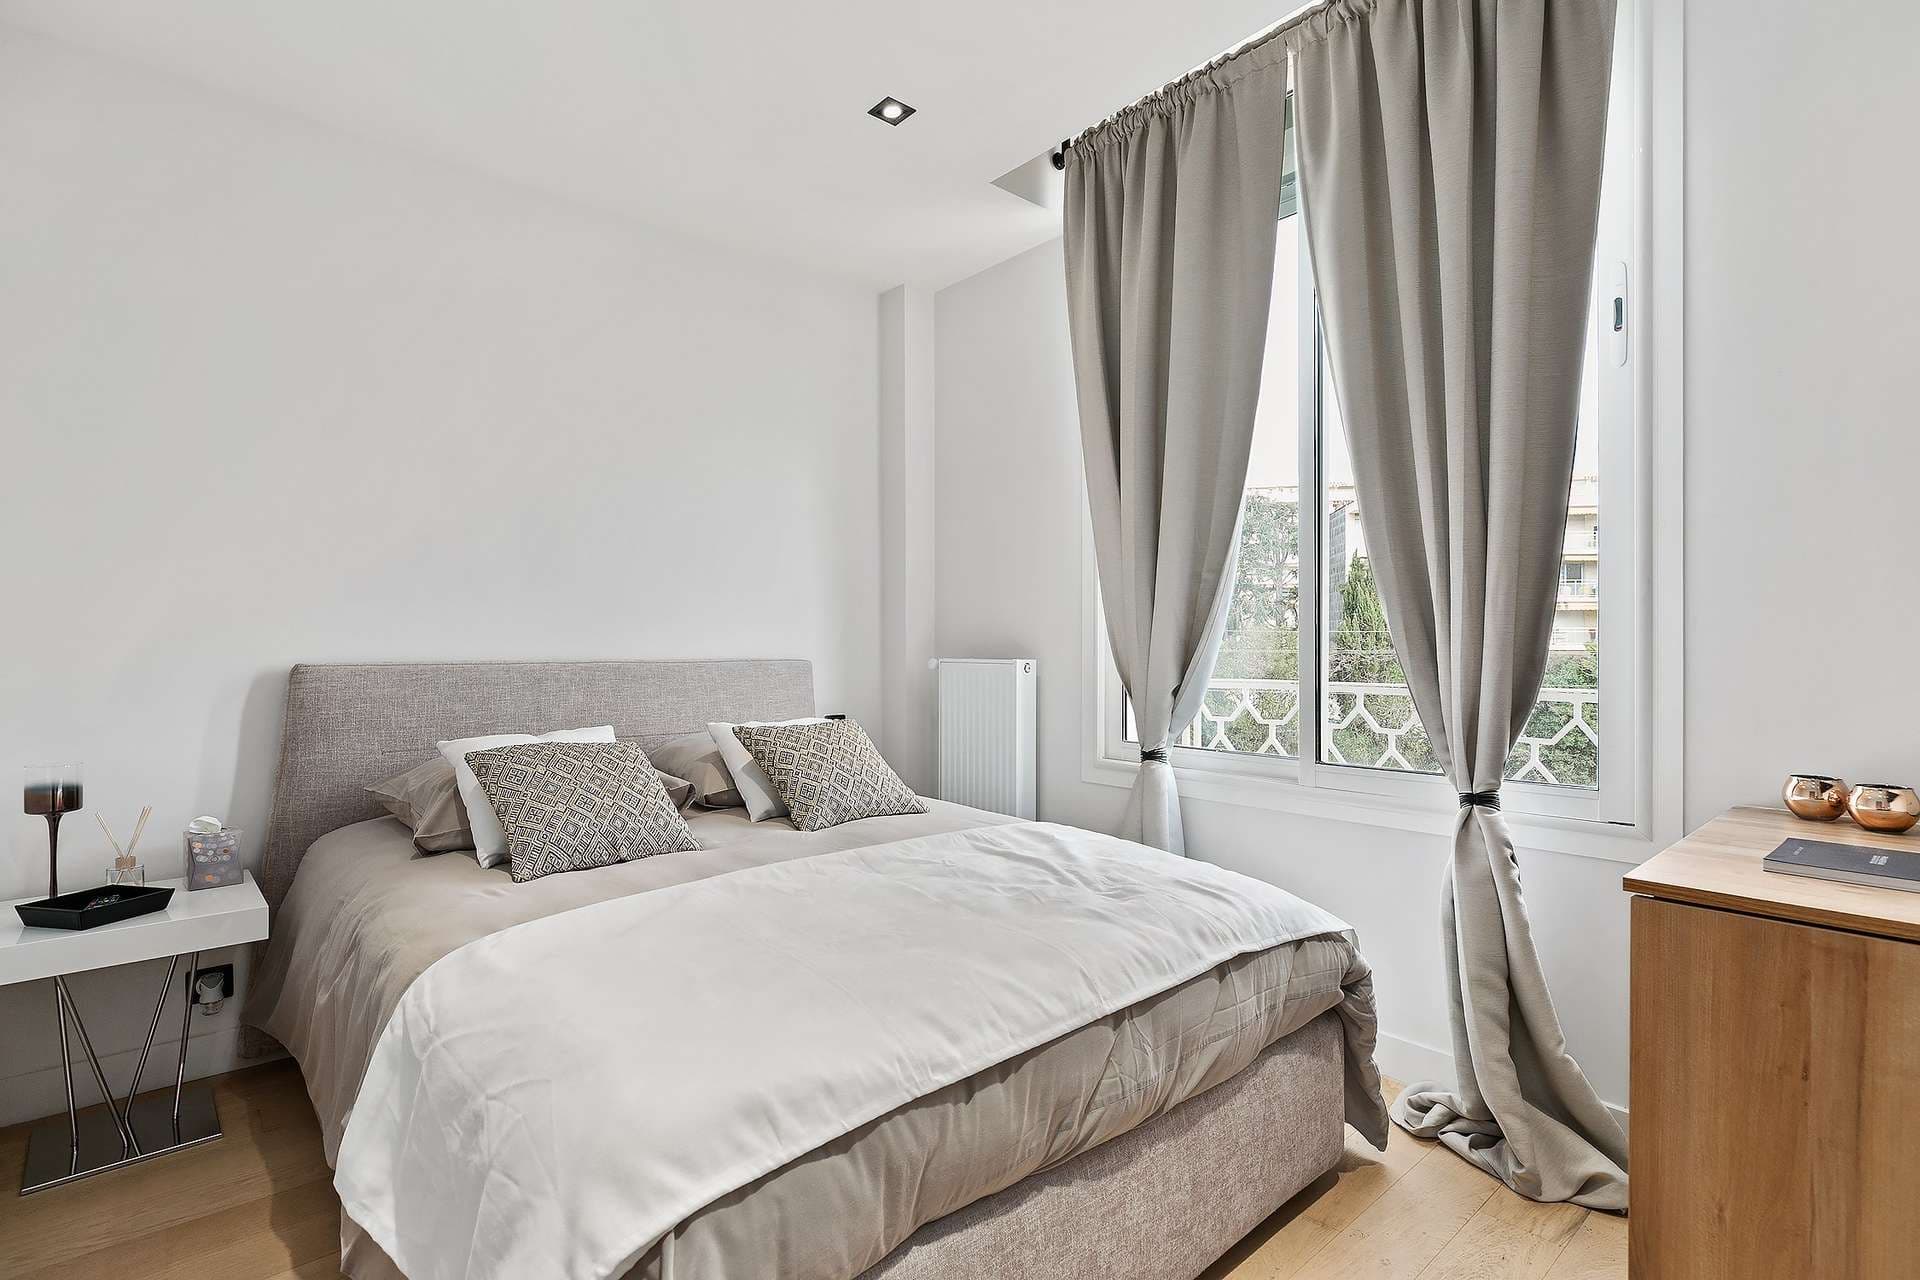 4 Bedroom Apartment For Sale Cannes Lp01016 76008e20a75e880.jpg